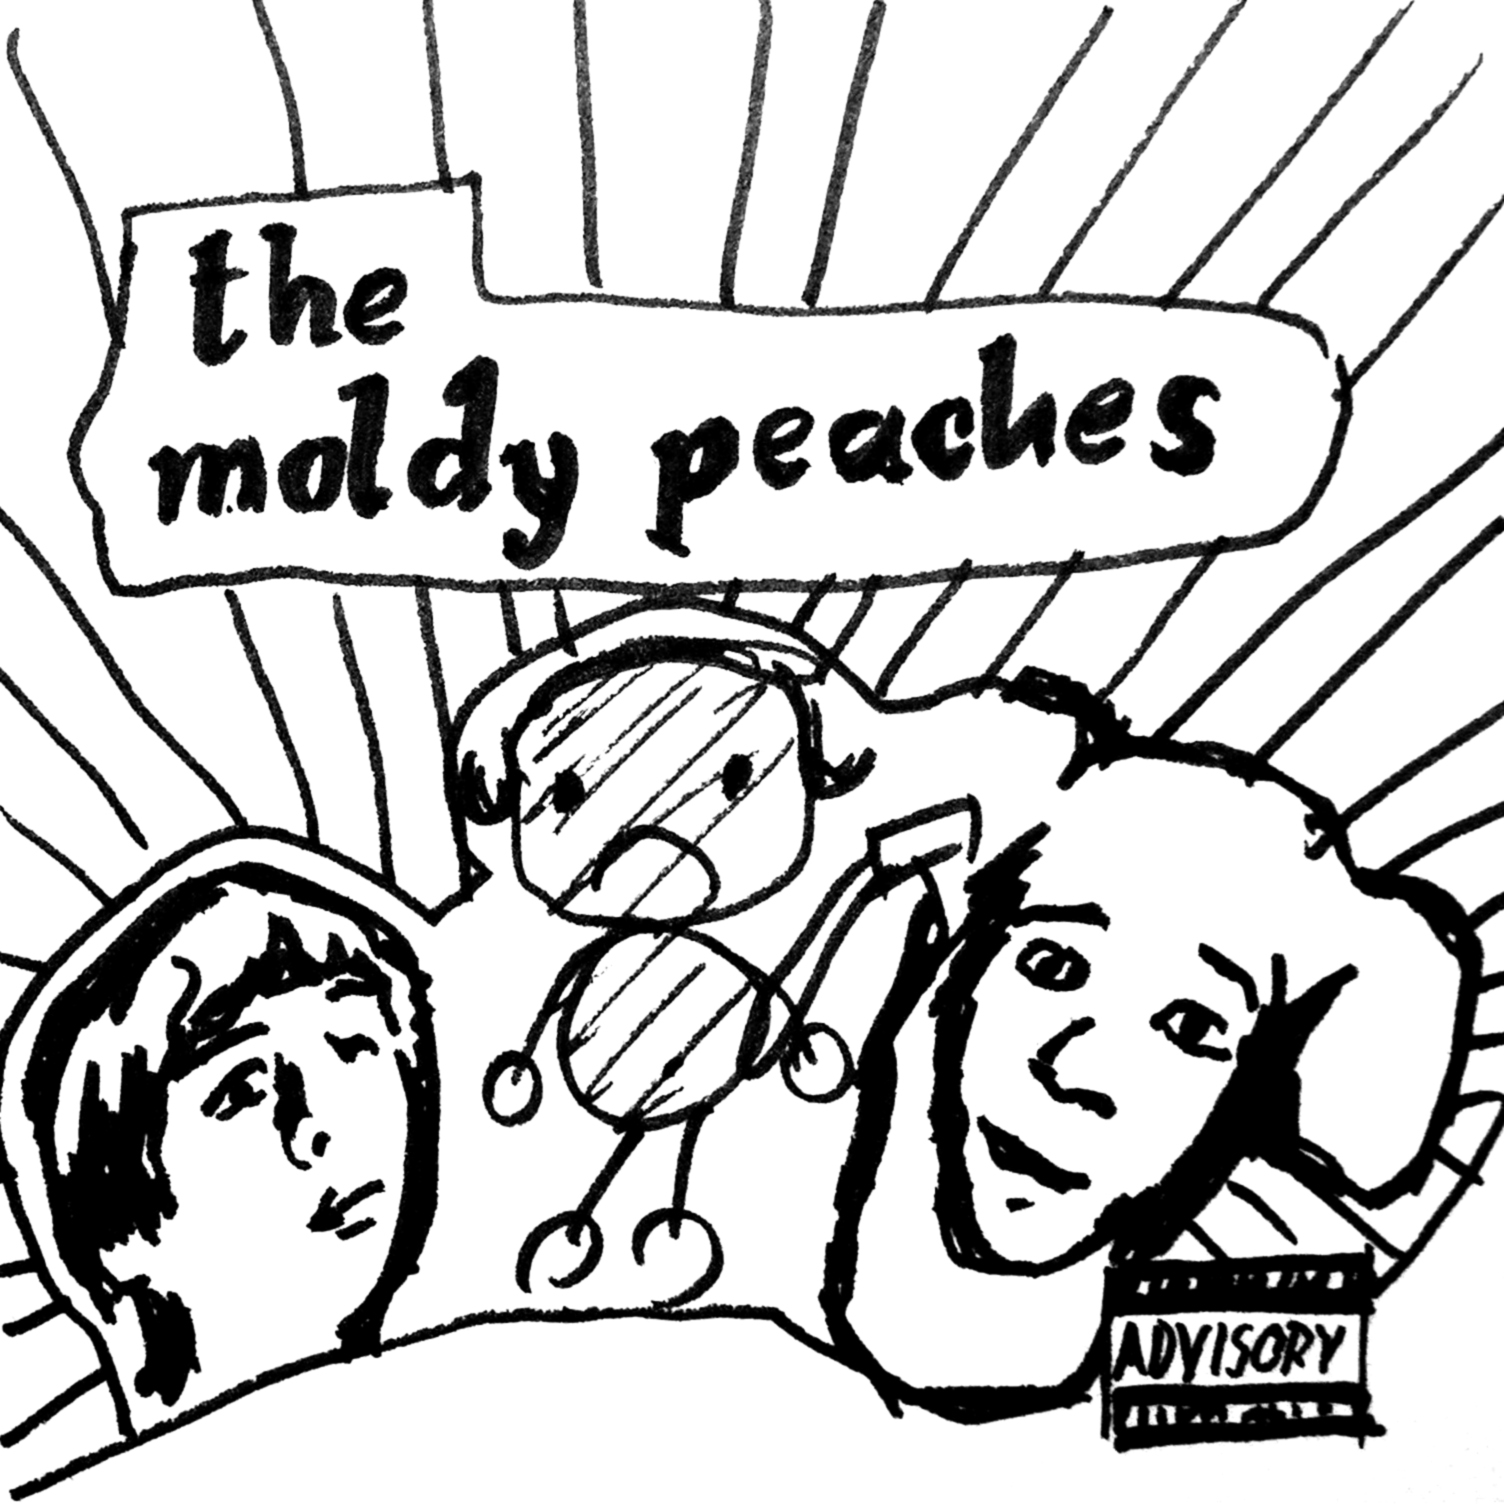 http://lofifuzz.files.wordpress.com/2012/11/the-moldy-peaches-cover.jpg